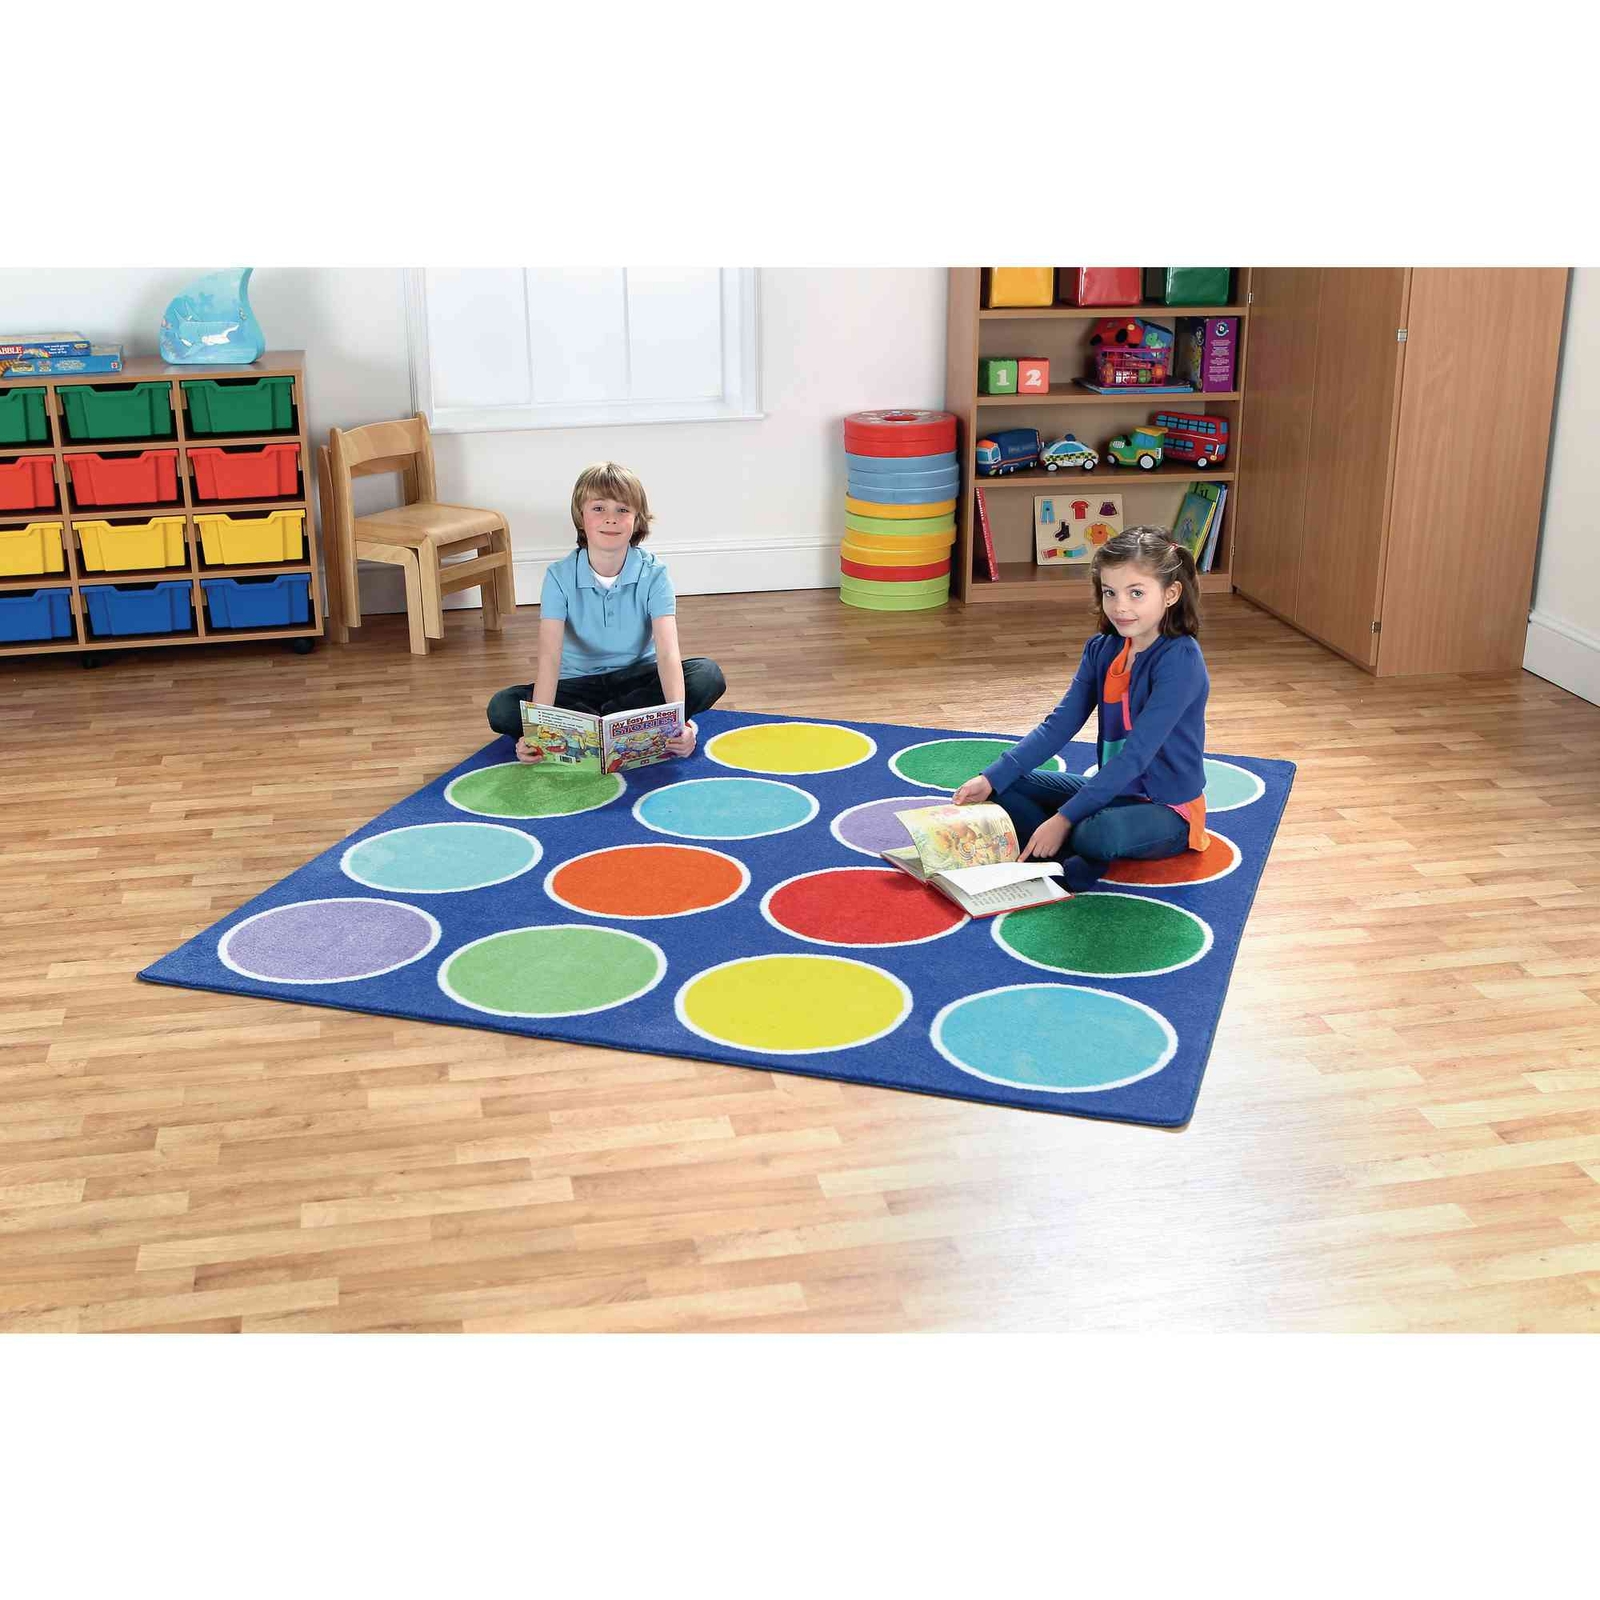 Rainbow Circle Placement Carpet